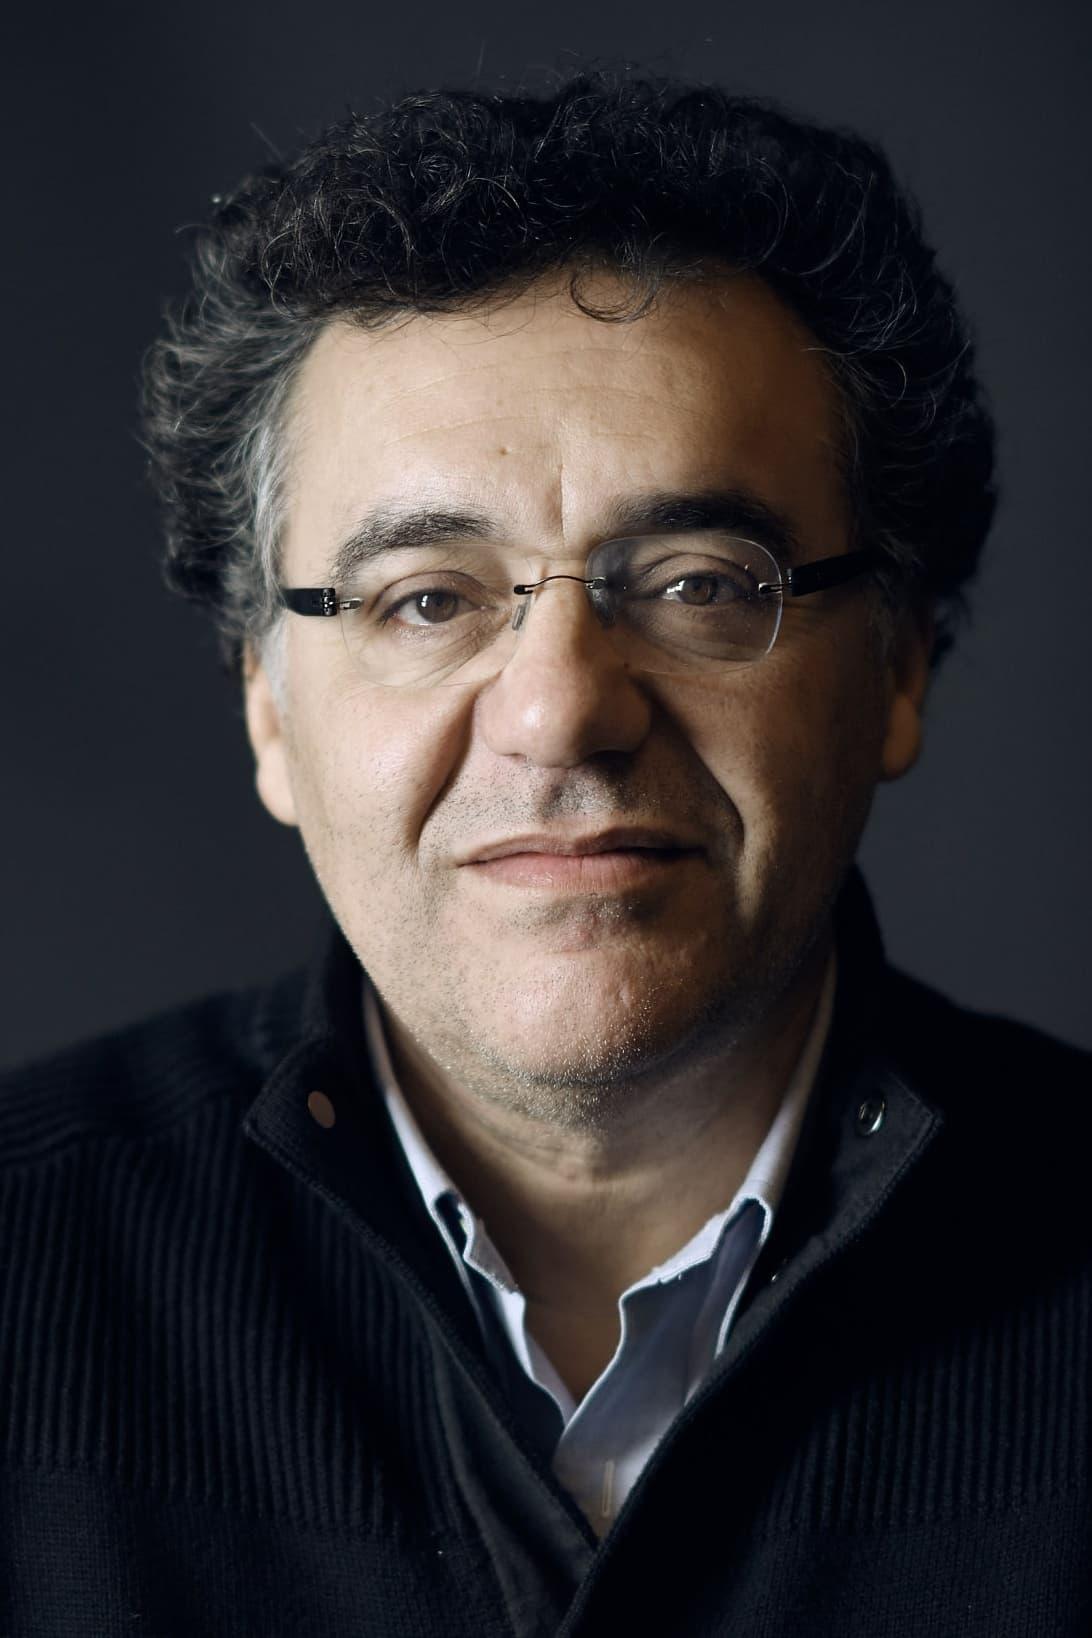 Rodrigo García | Director of Photography